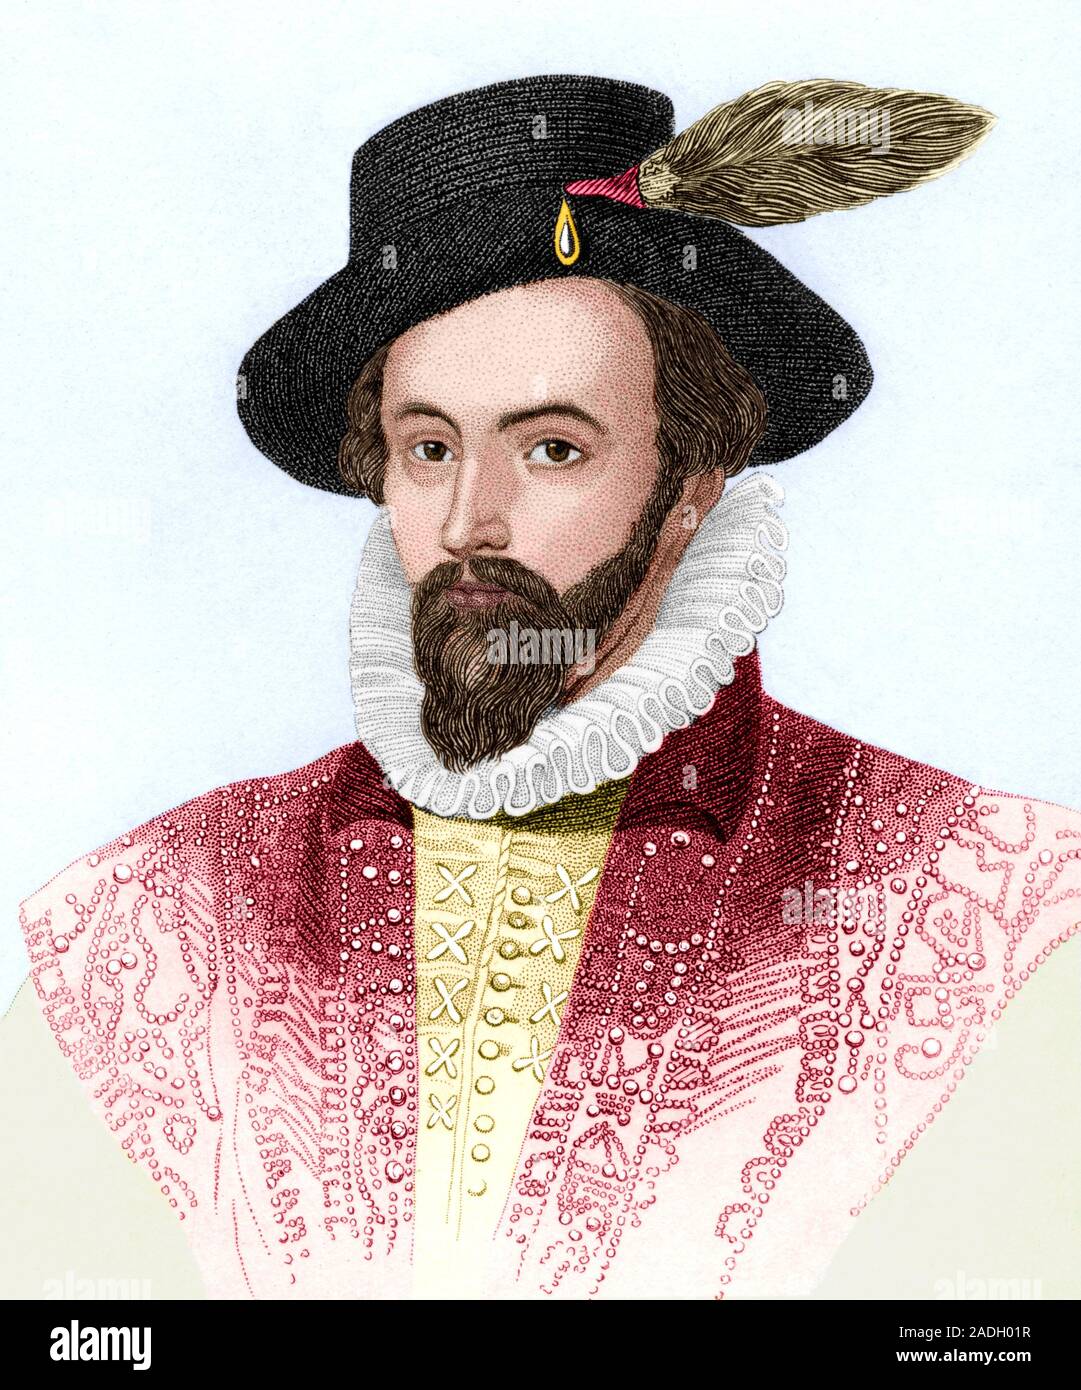 Уолтер рейли. Сэр Уолтер Рэли. Уолтер Рэли портрет. Сэр Уолтер Рейли портрет. Walter Raleigh (1552 -1618).